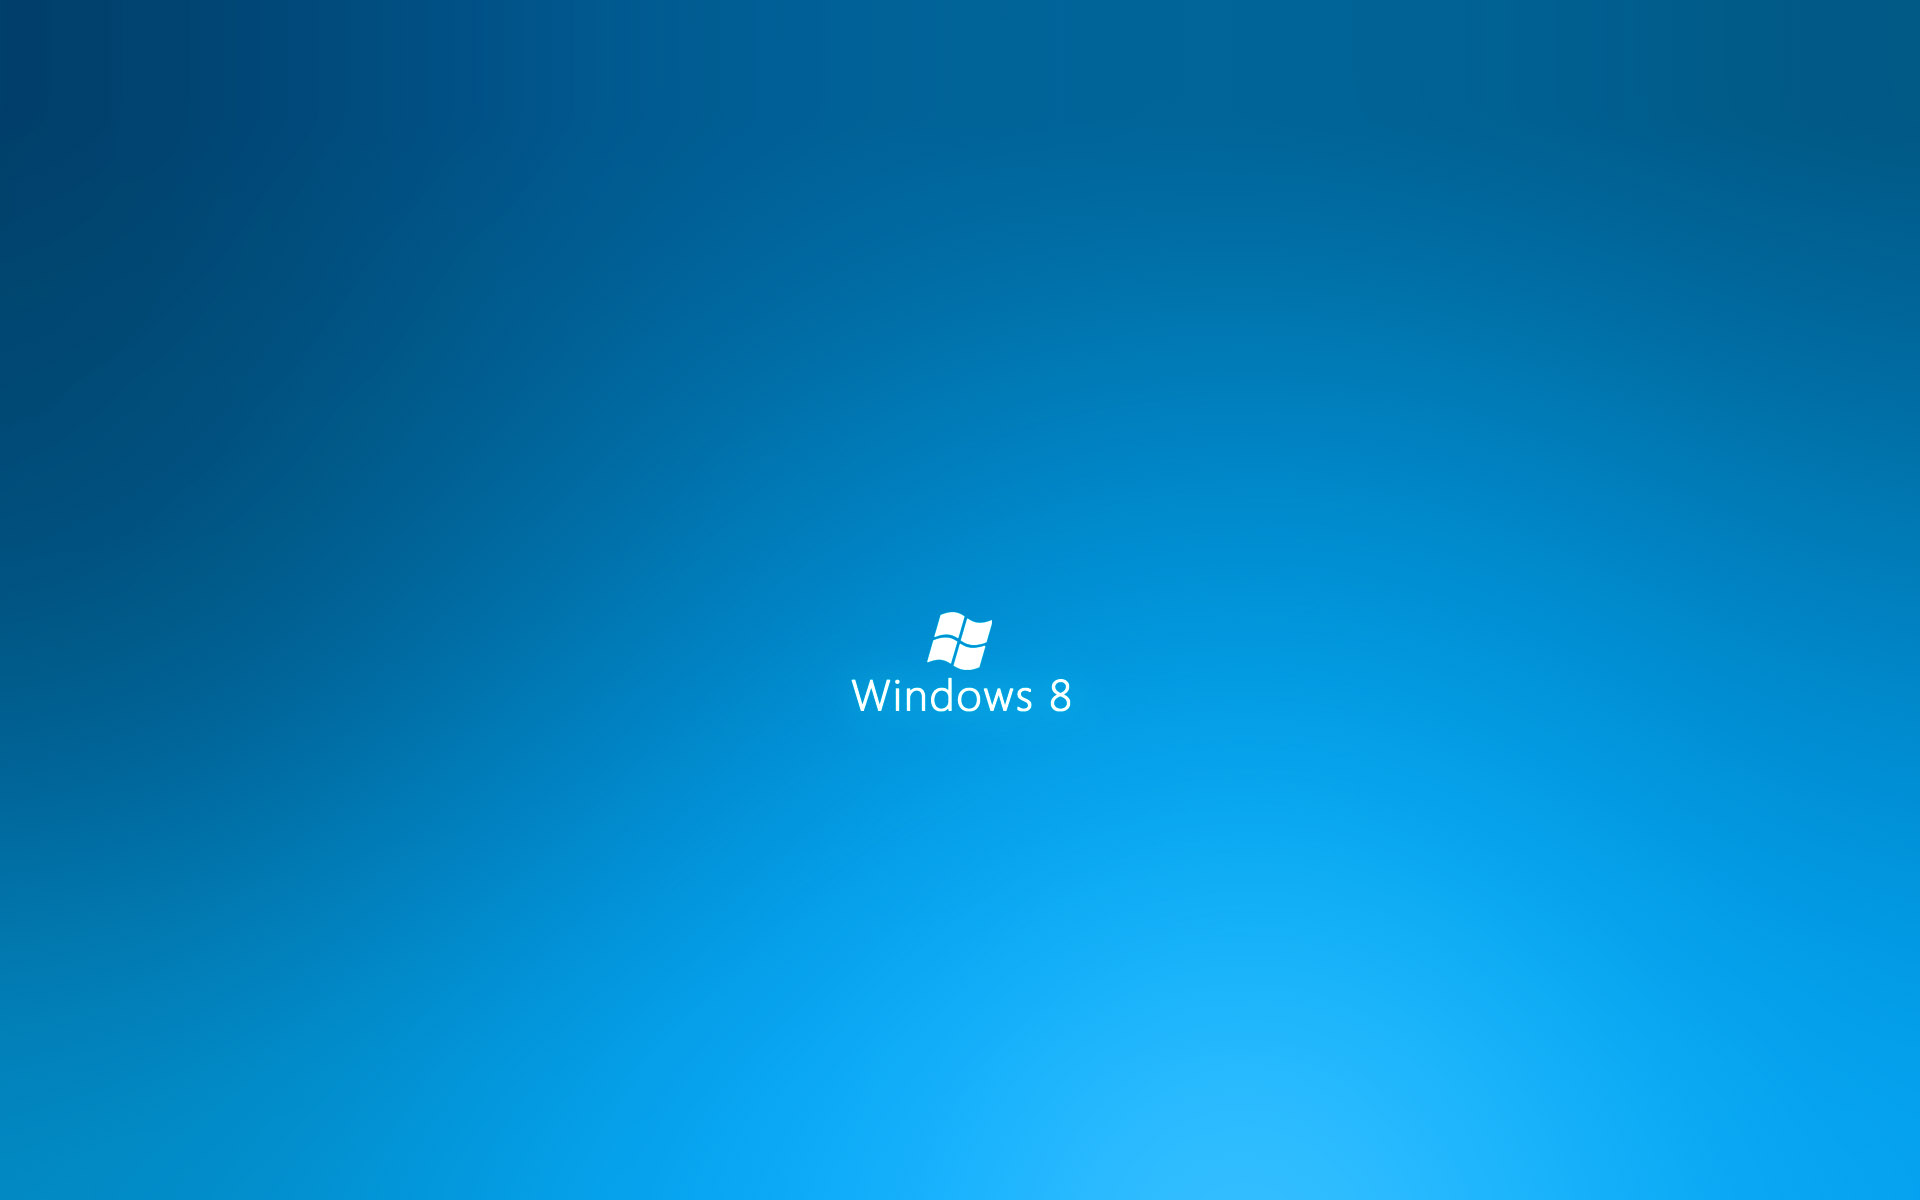 Clear Blue Windows 8 1920x1200 WIDE Image Computers Windows 8